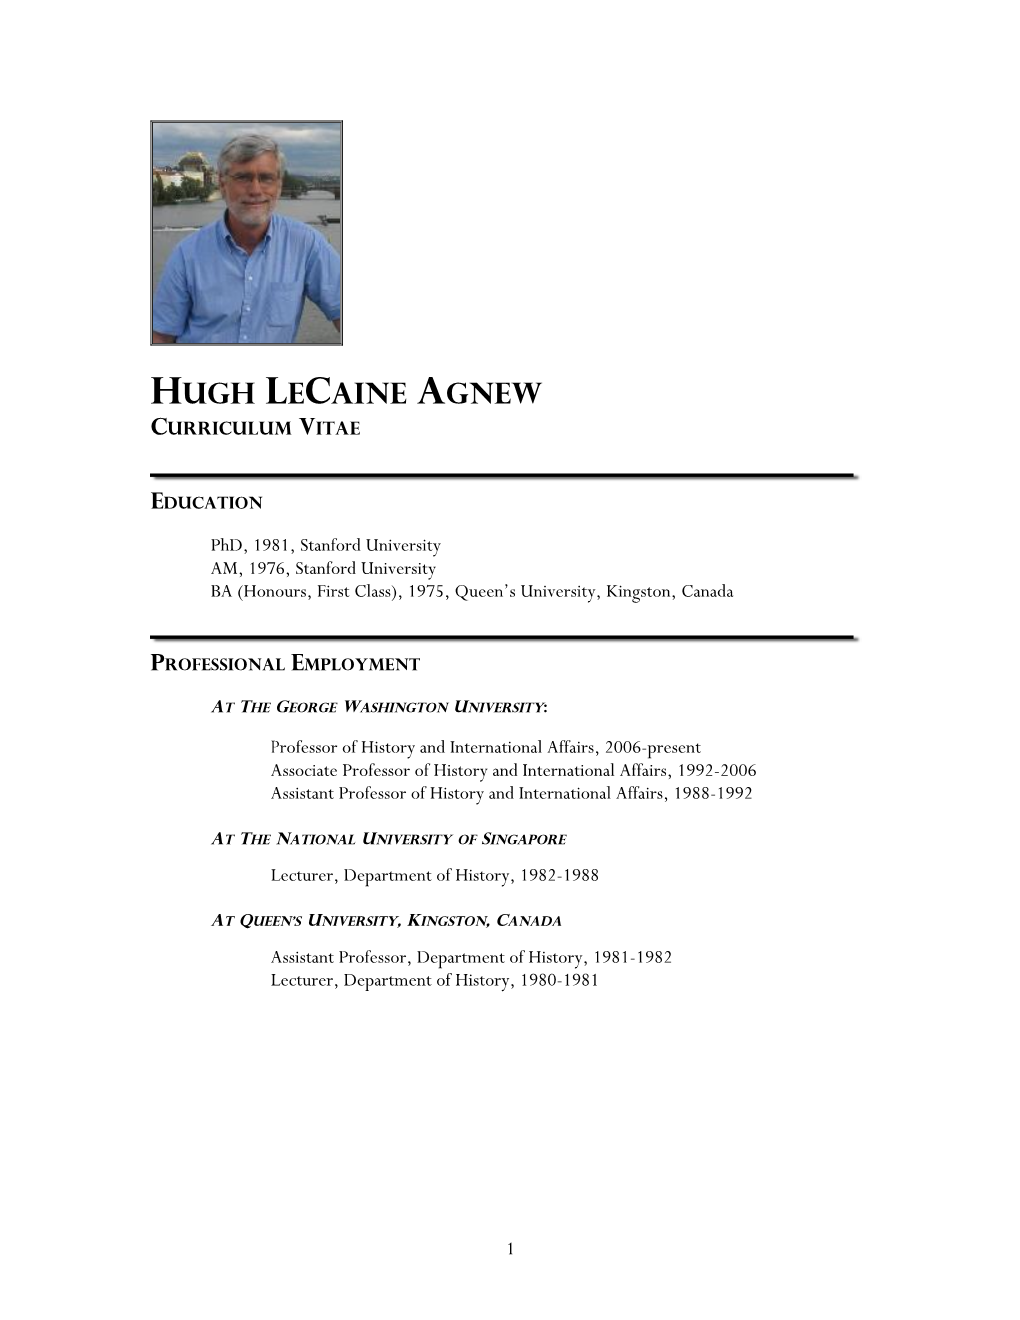 Hugh Lecaine Agnew Curriculum Vitae